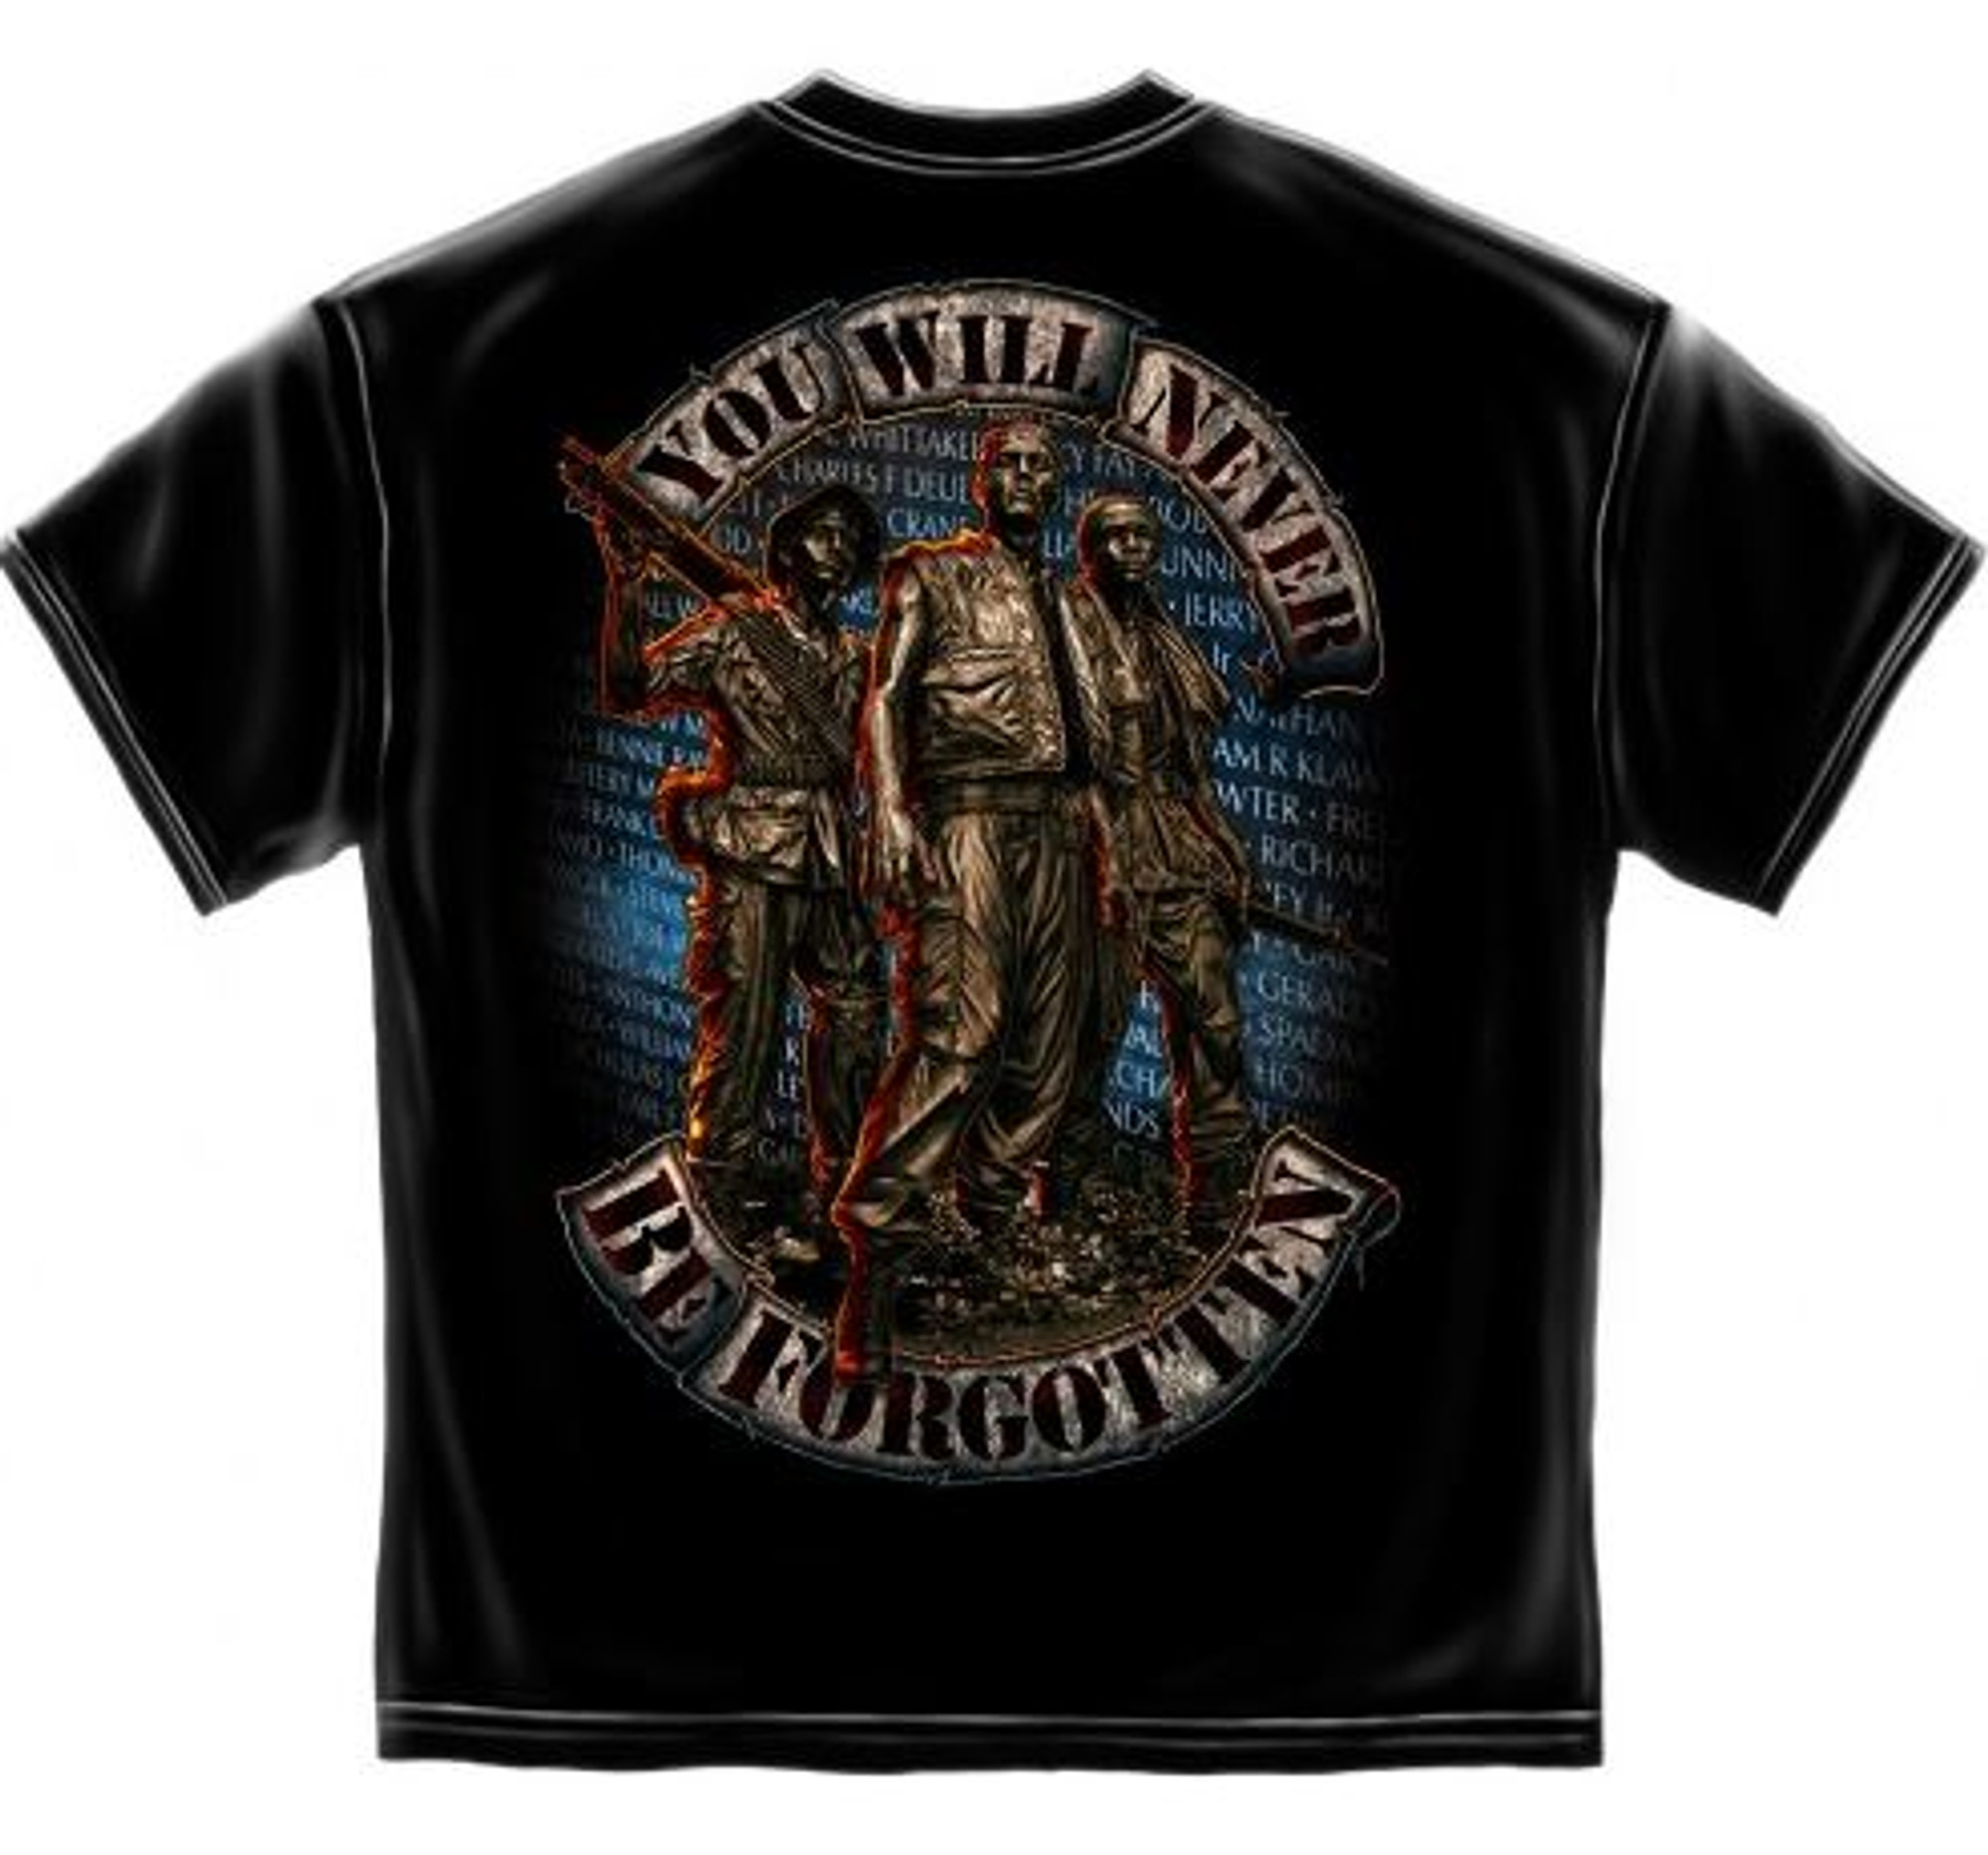 US Veteran "Never Forget Vietnam" T-Shirt